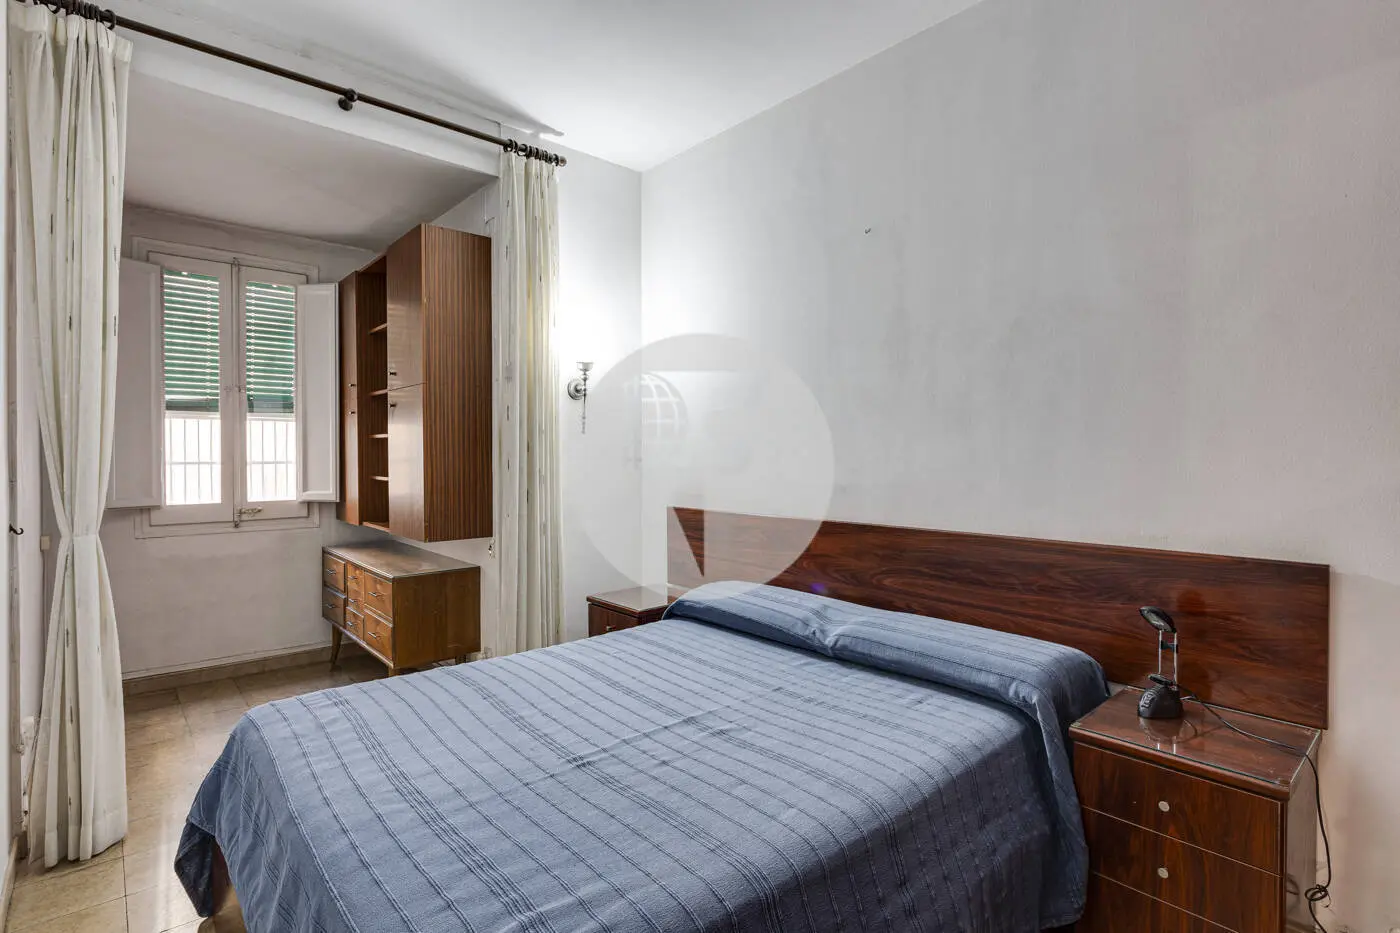 3-bedroom apartment located in the Nova Esquerra de l'Eixample neighborhood of Barcelona. 16